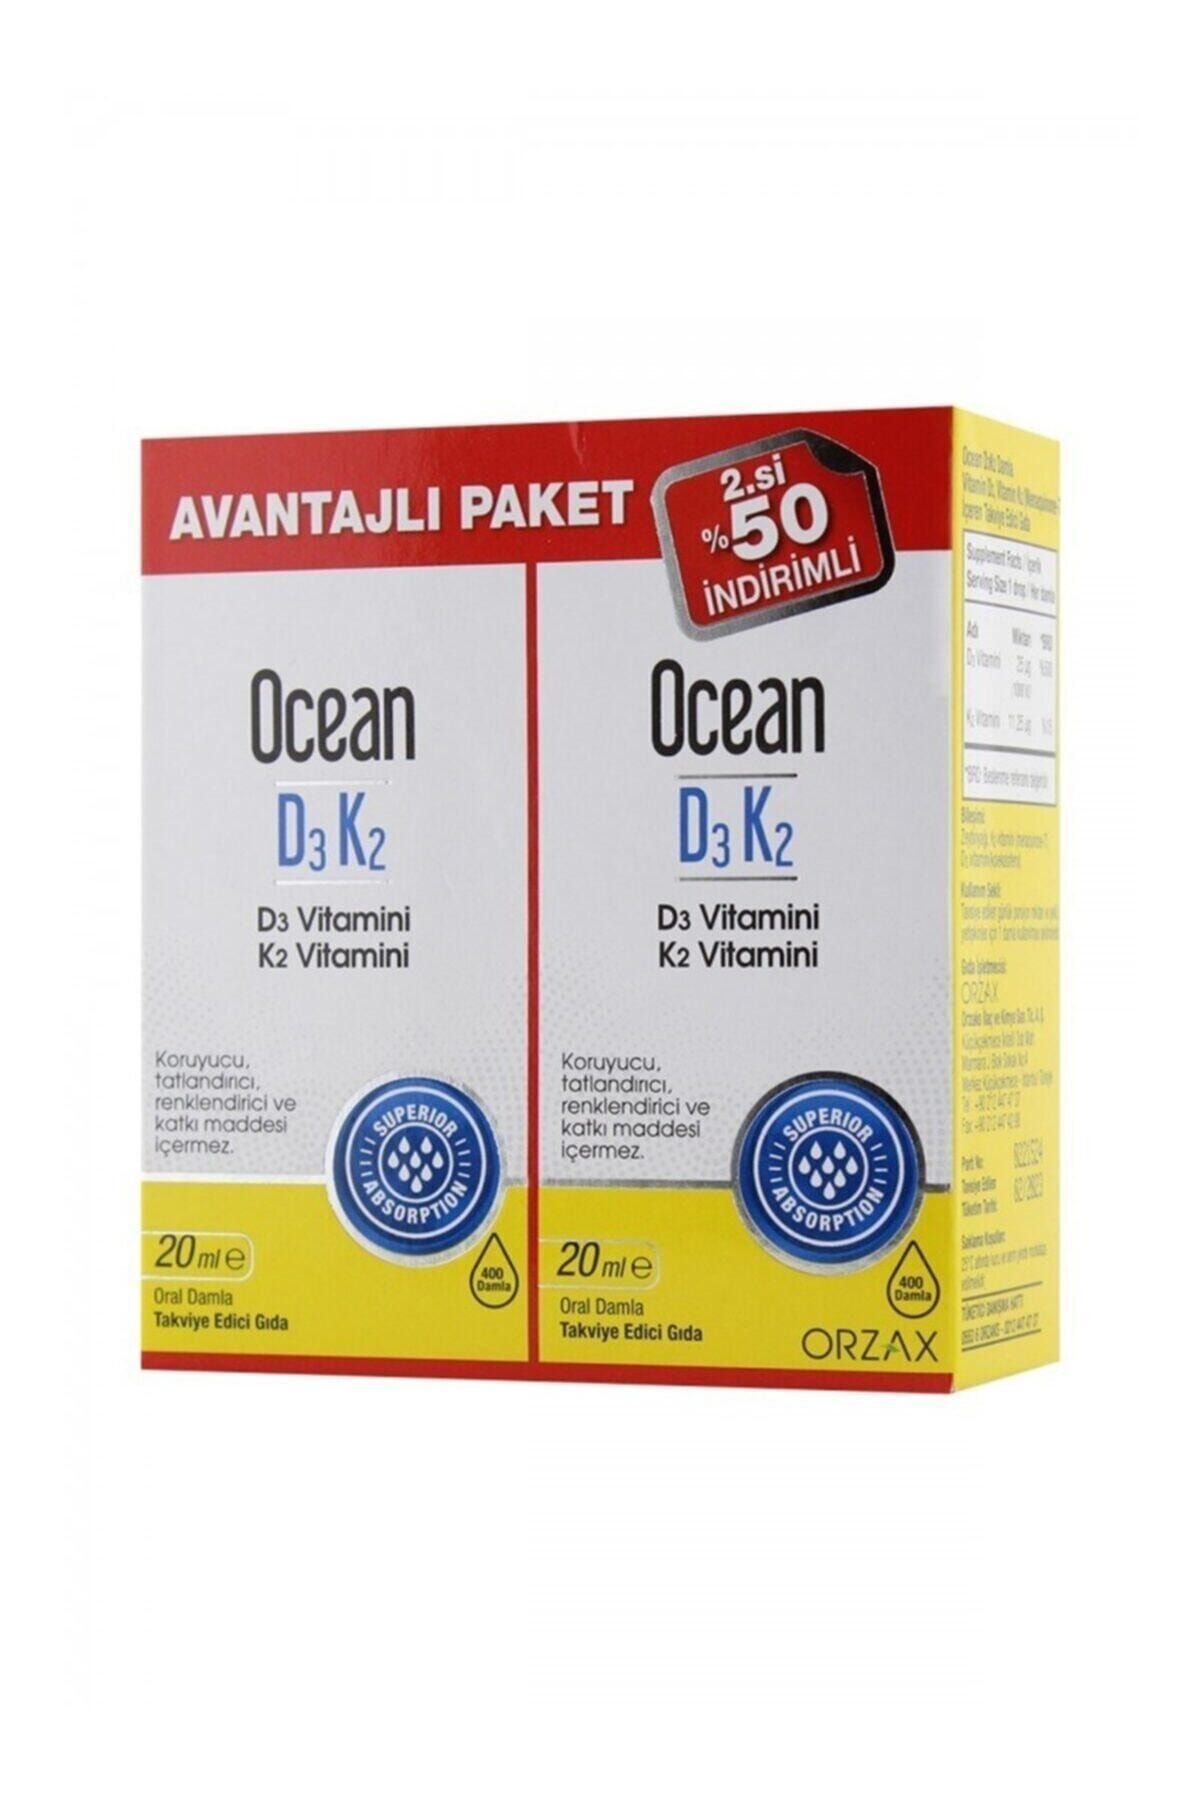 Ocean Ocean D3k2 Damla 20 Ml X 2 Adet Avantajlı Paket